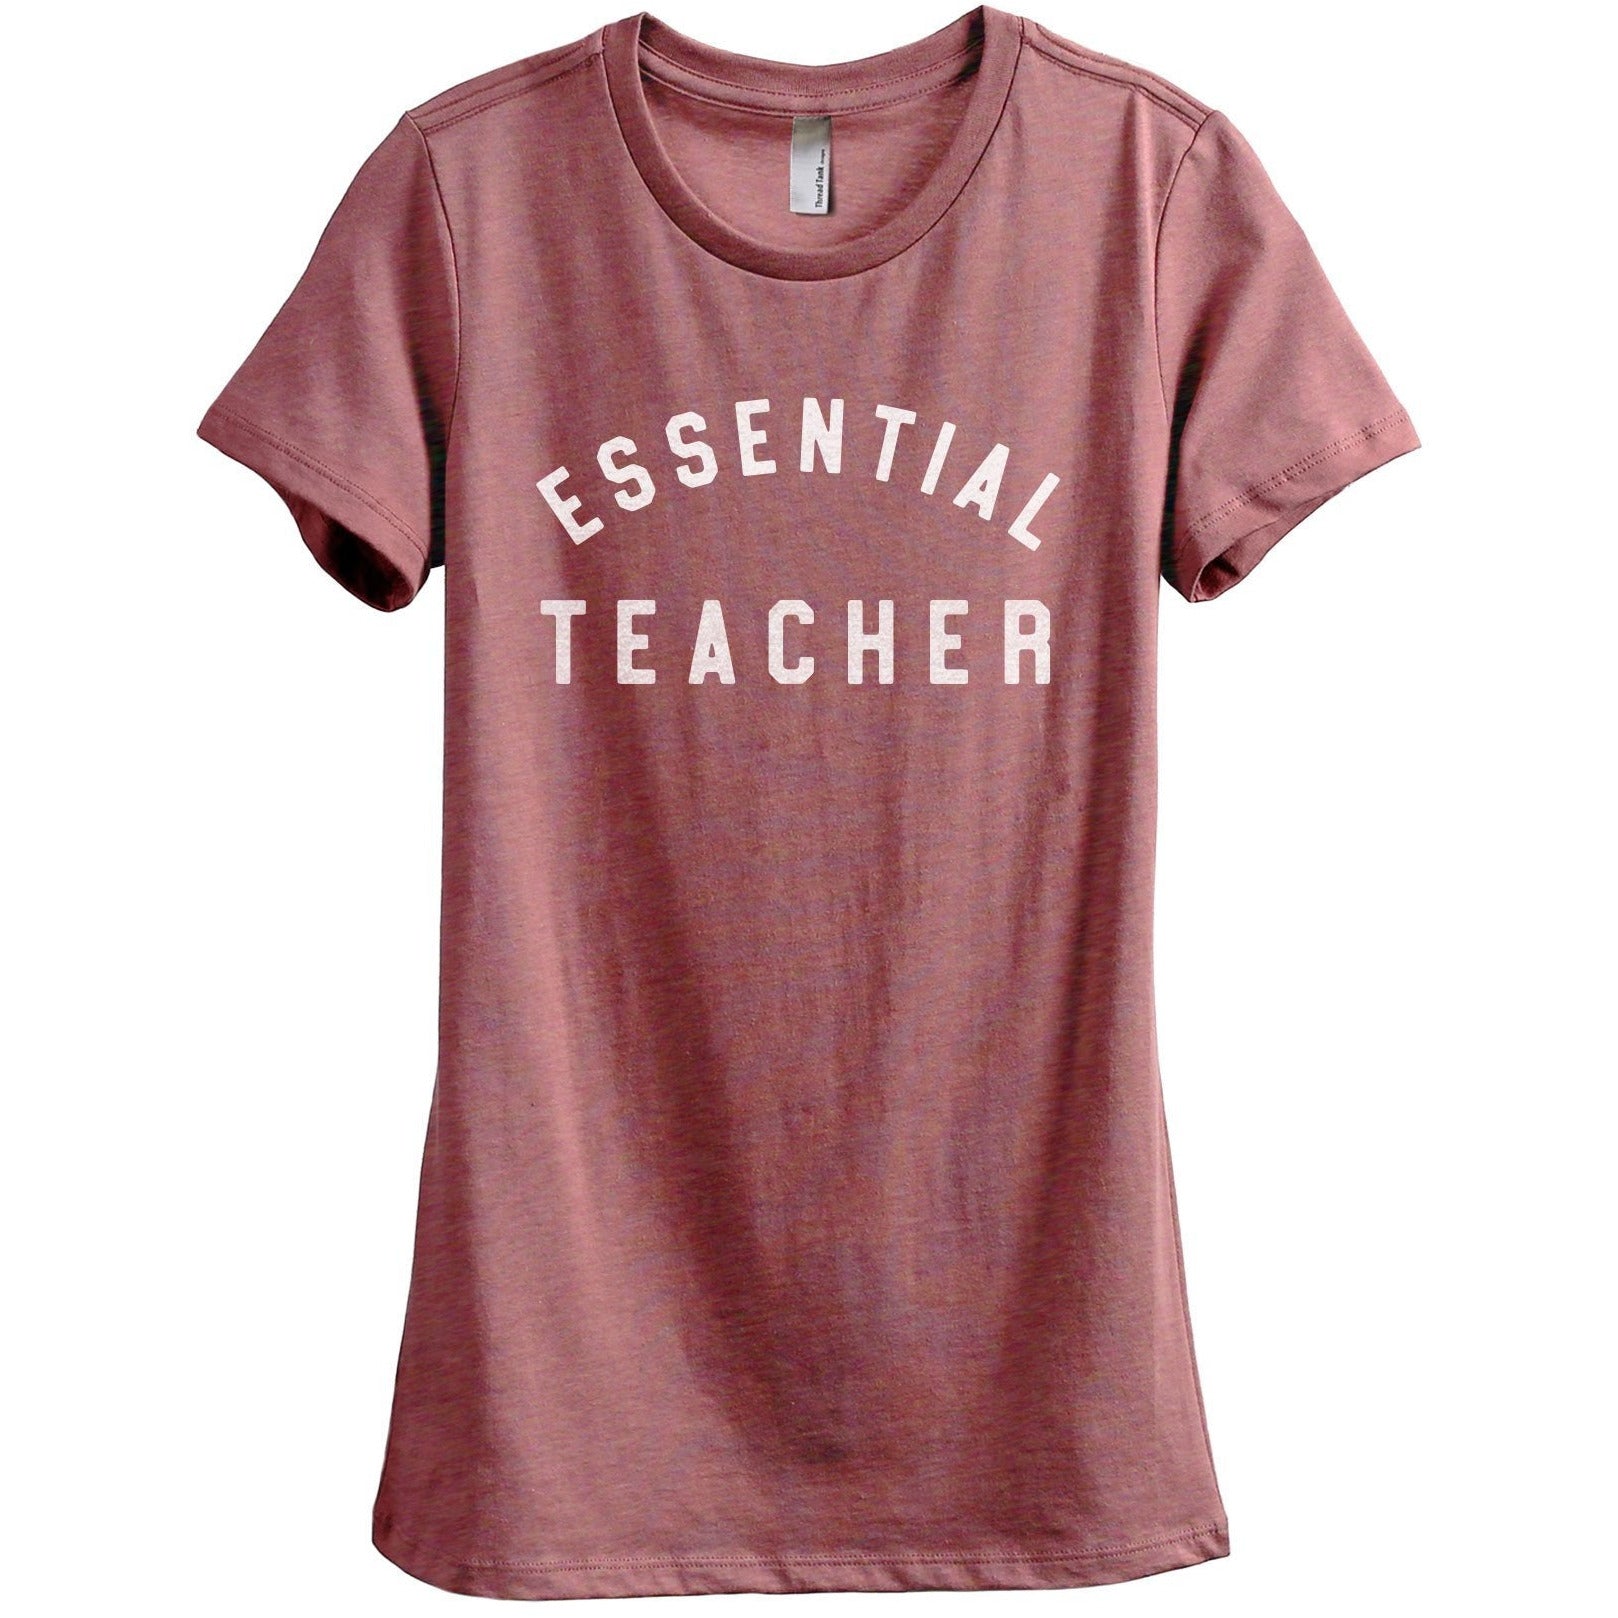 Essential Teacher Women's Relaxed Crewneck T-Shirt Top Tee Heather Rouge Grey
